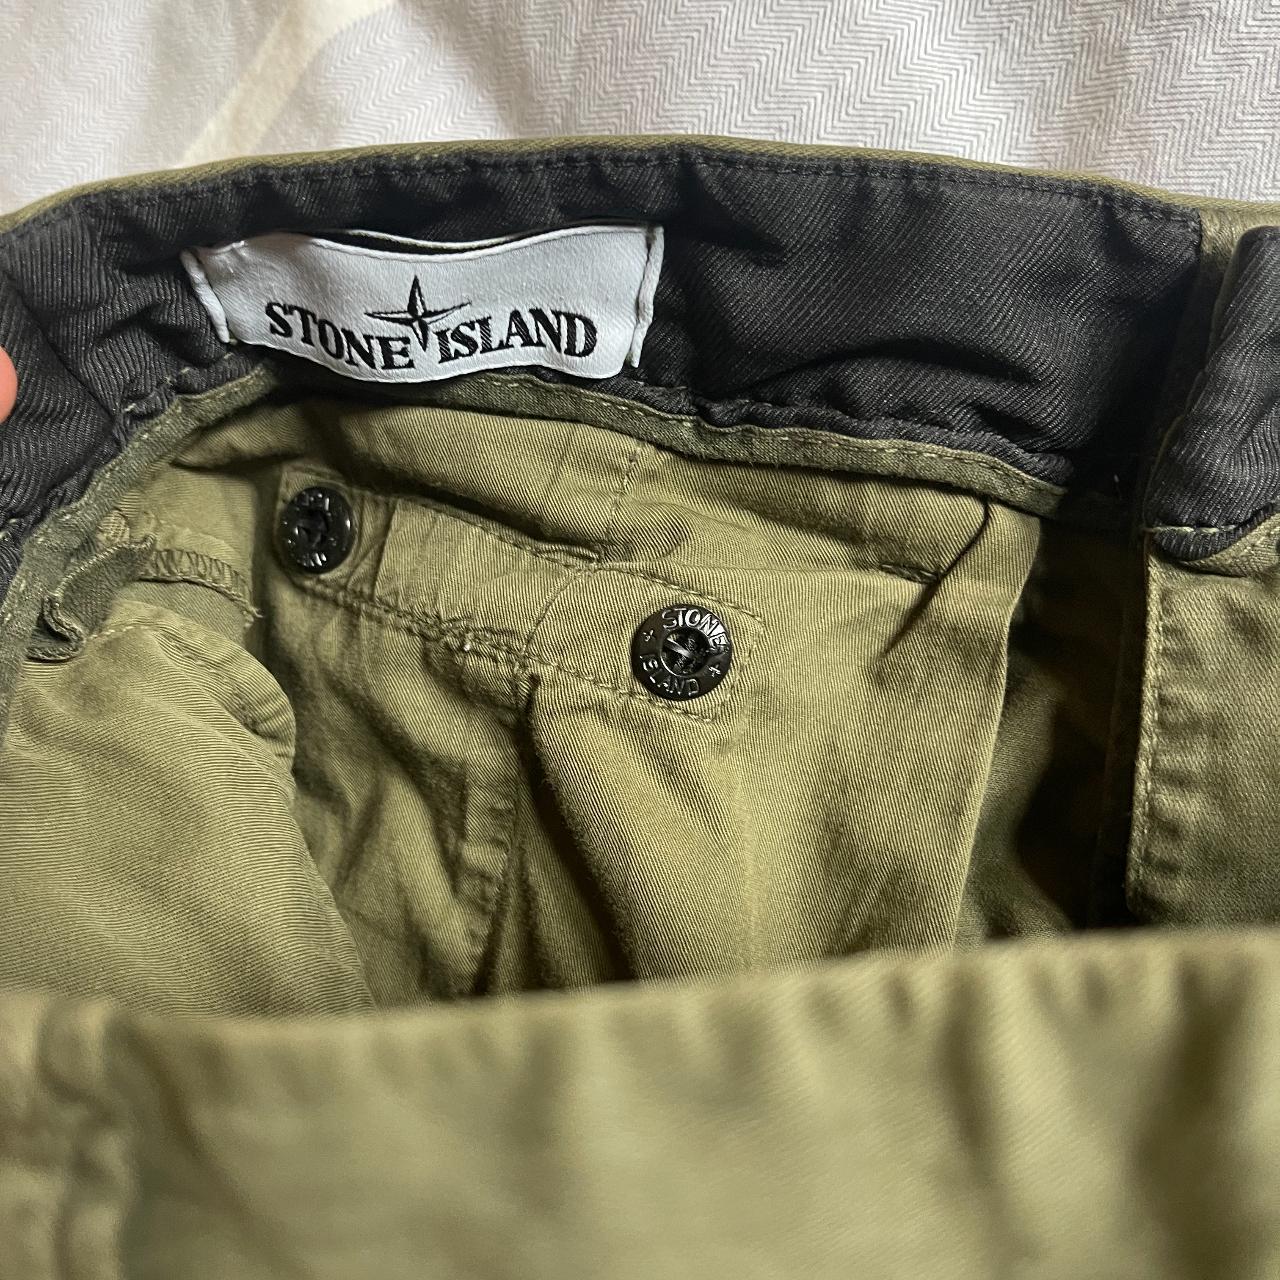 Stone Island Cargo Shorts with zip pockets 28... - Depop